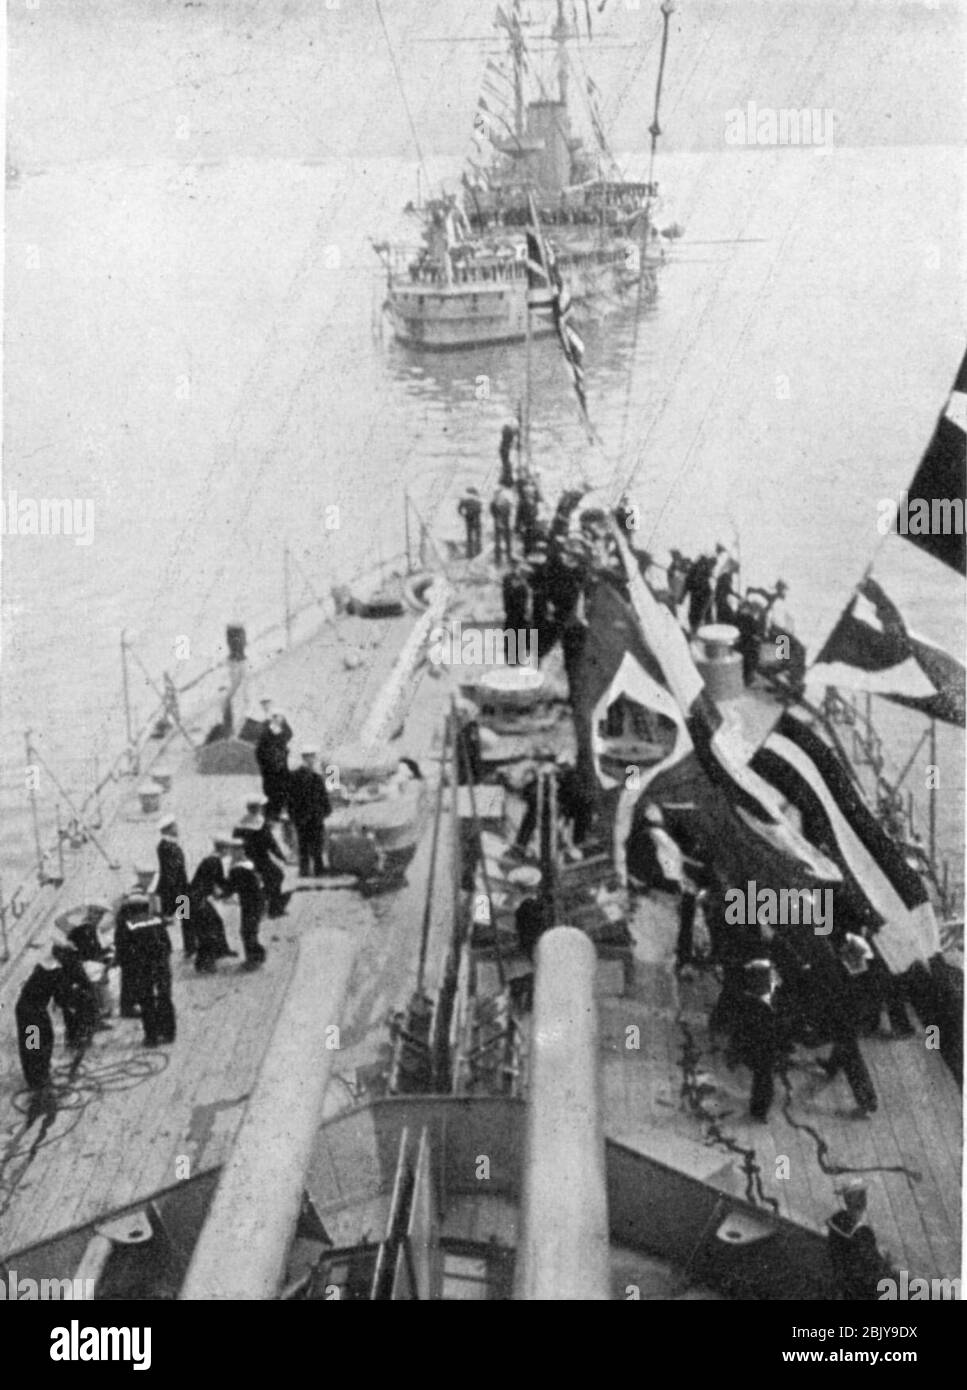 HMSDreadnought bridgeview. Stock Photo